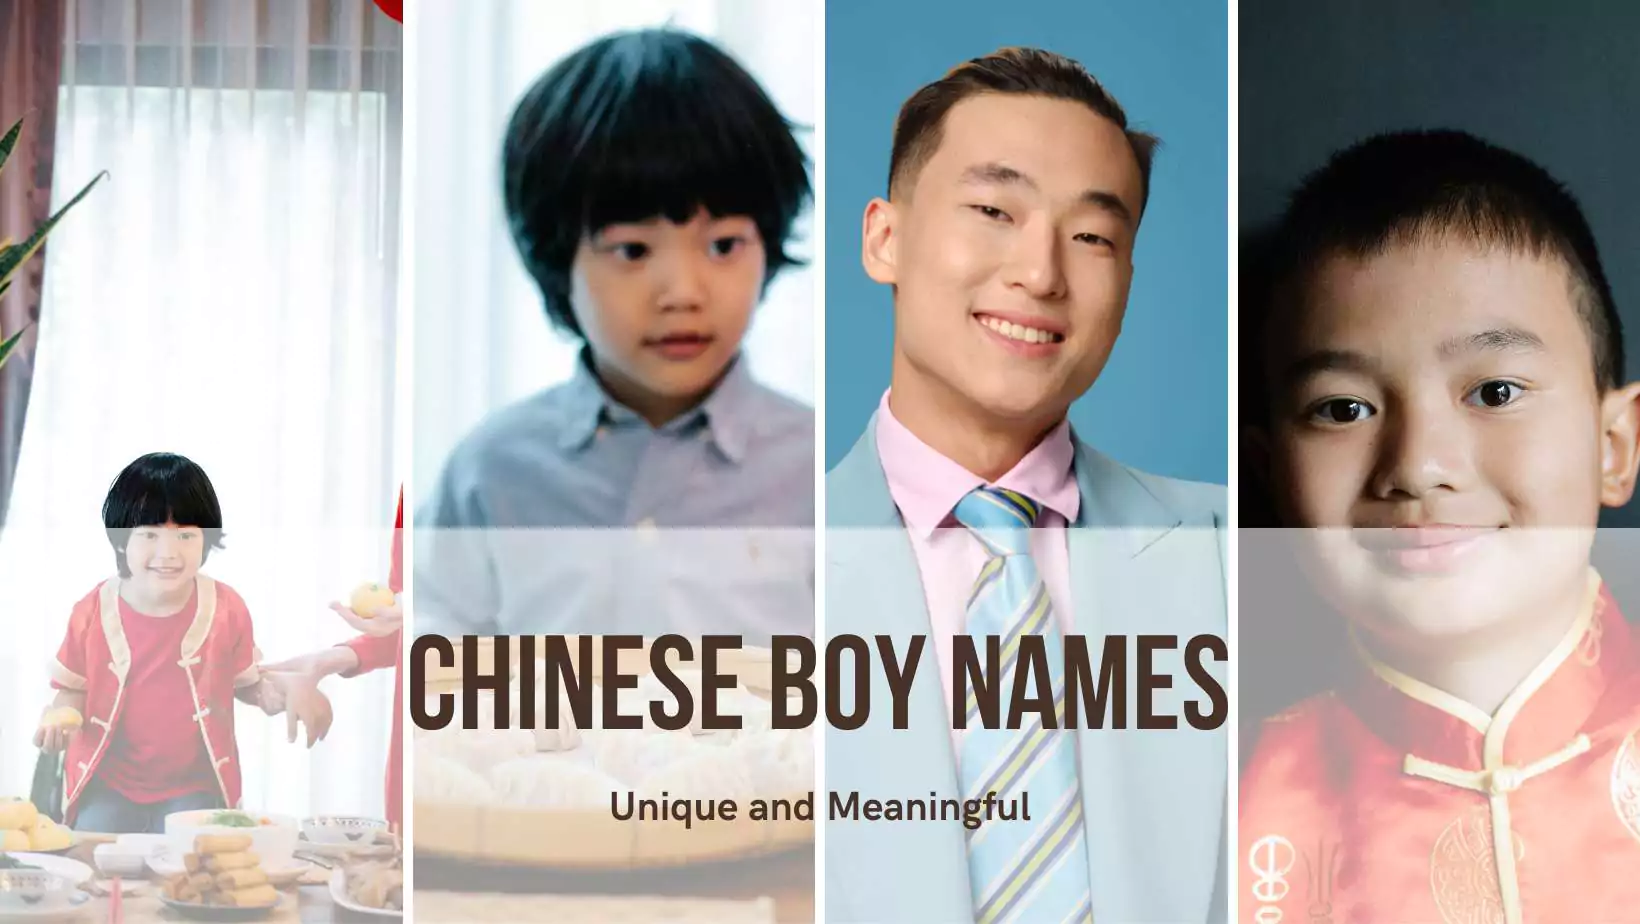 Chinese boy names